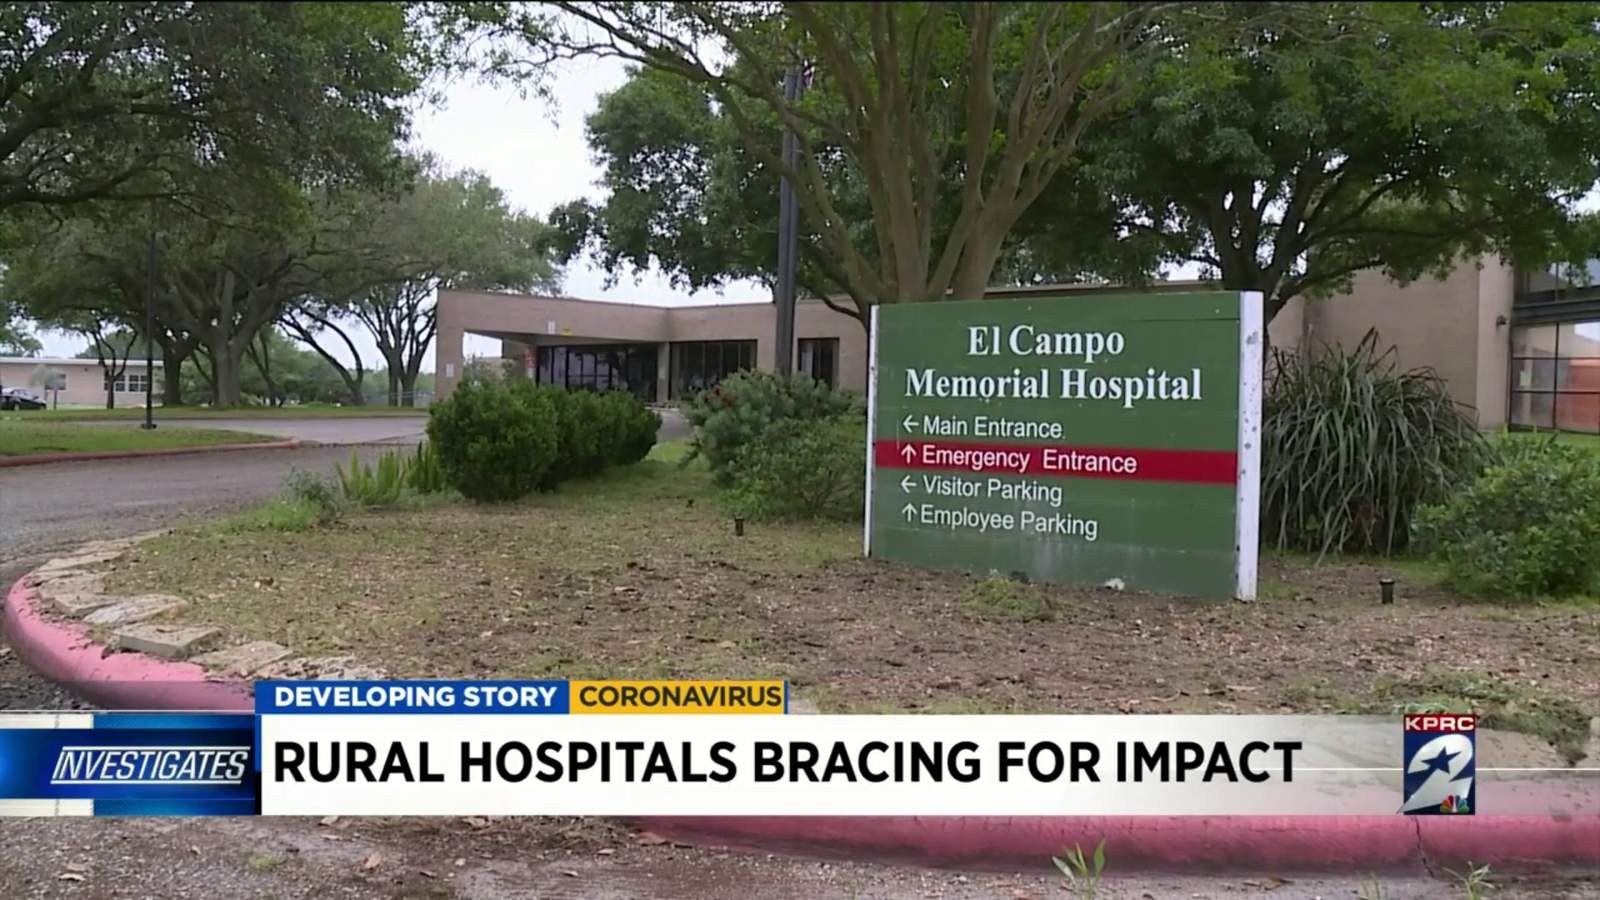 Rural hospitals in Houston area brace for coronavirus impact